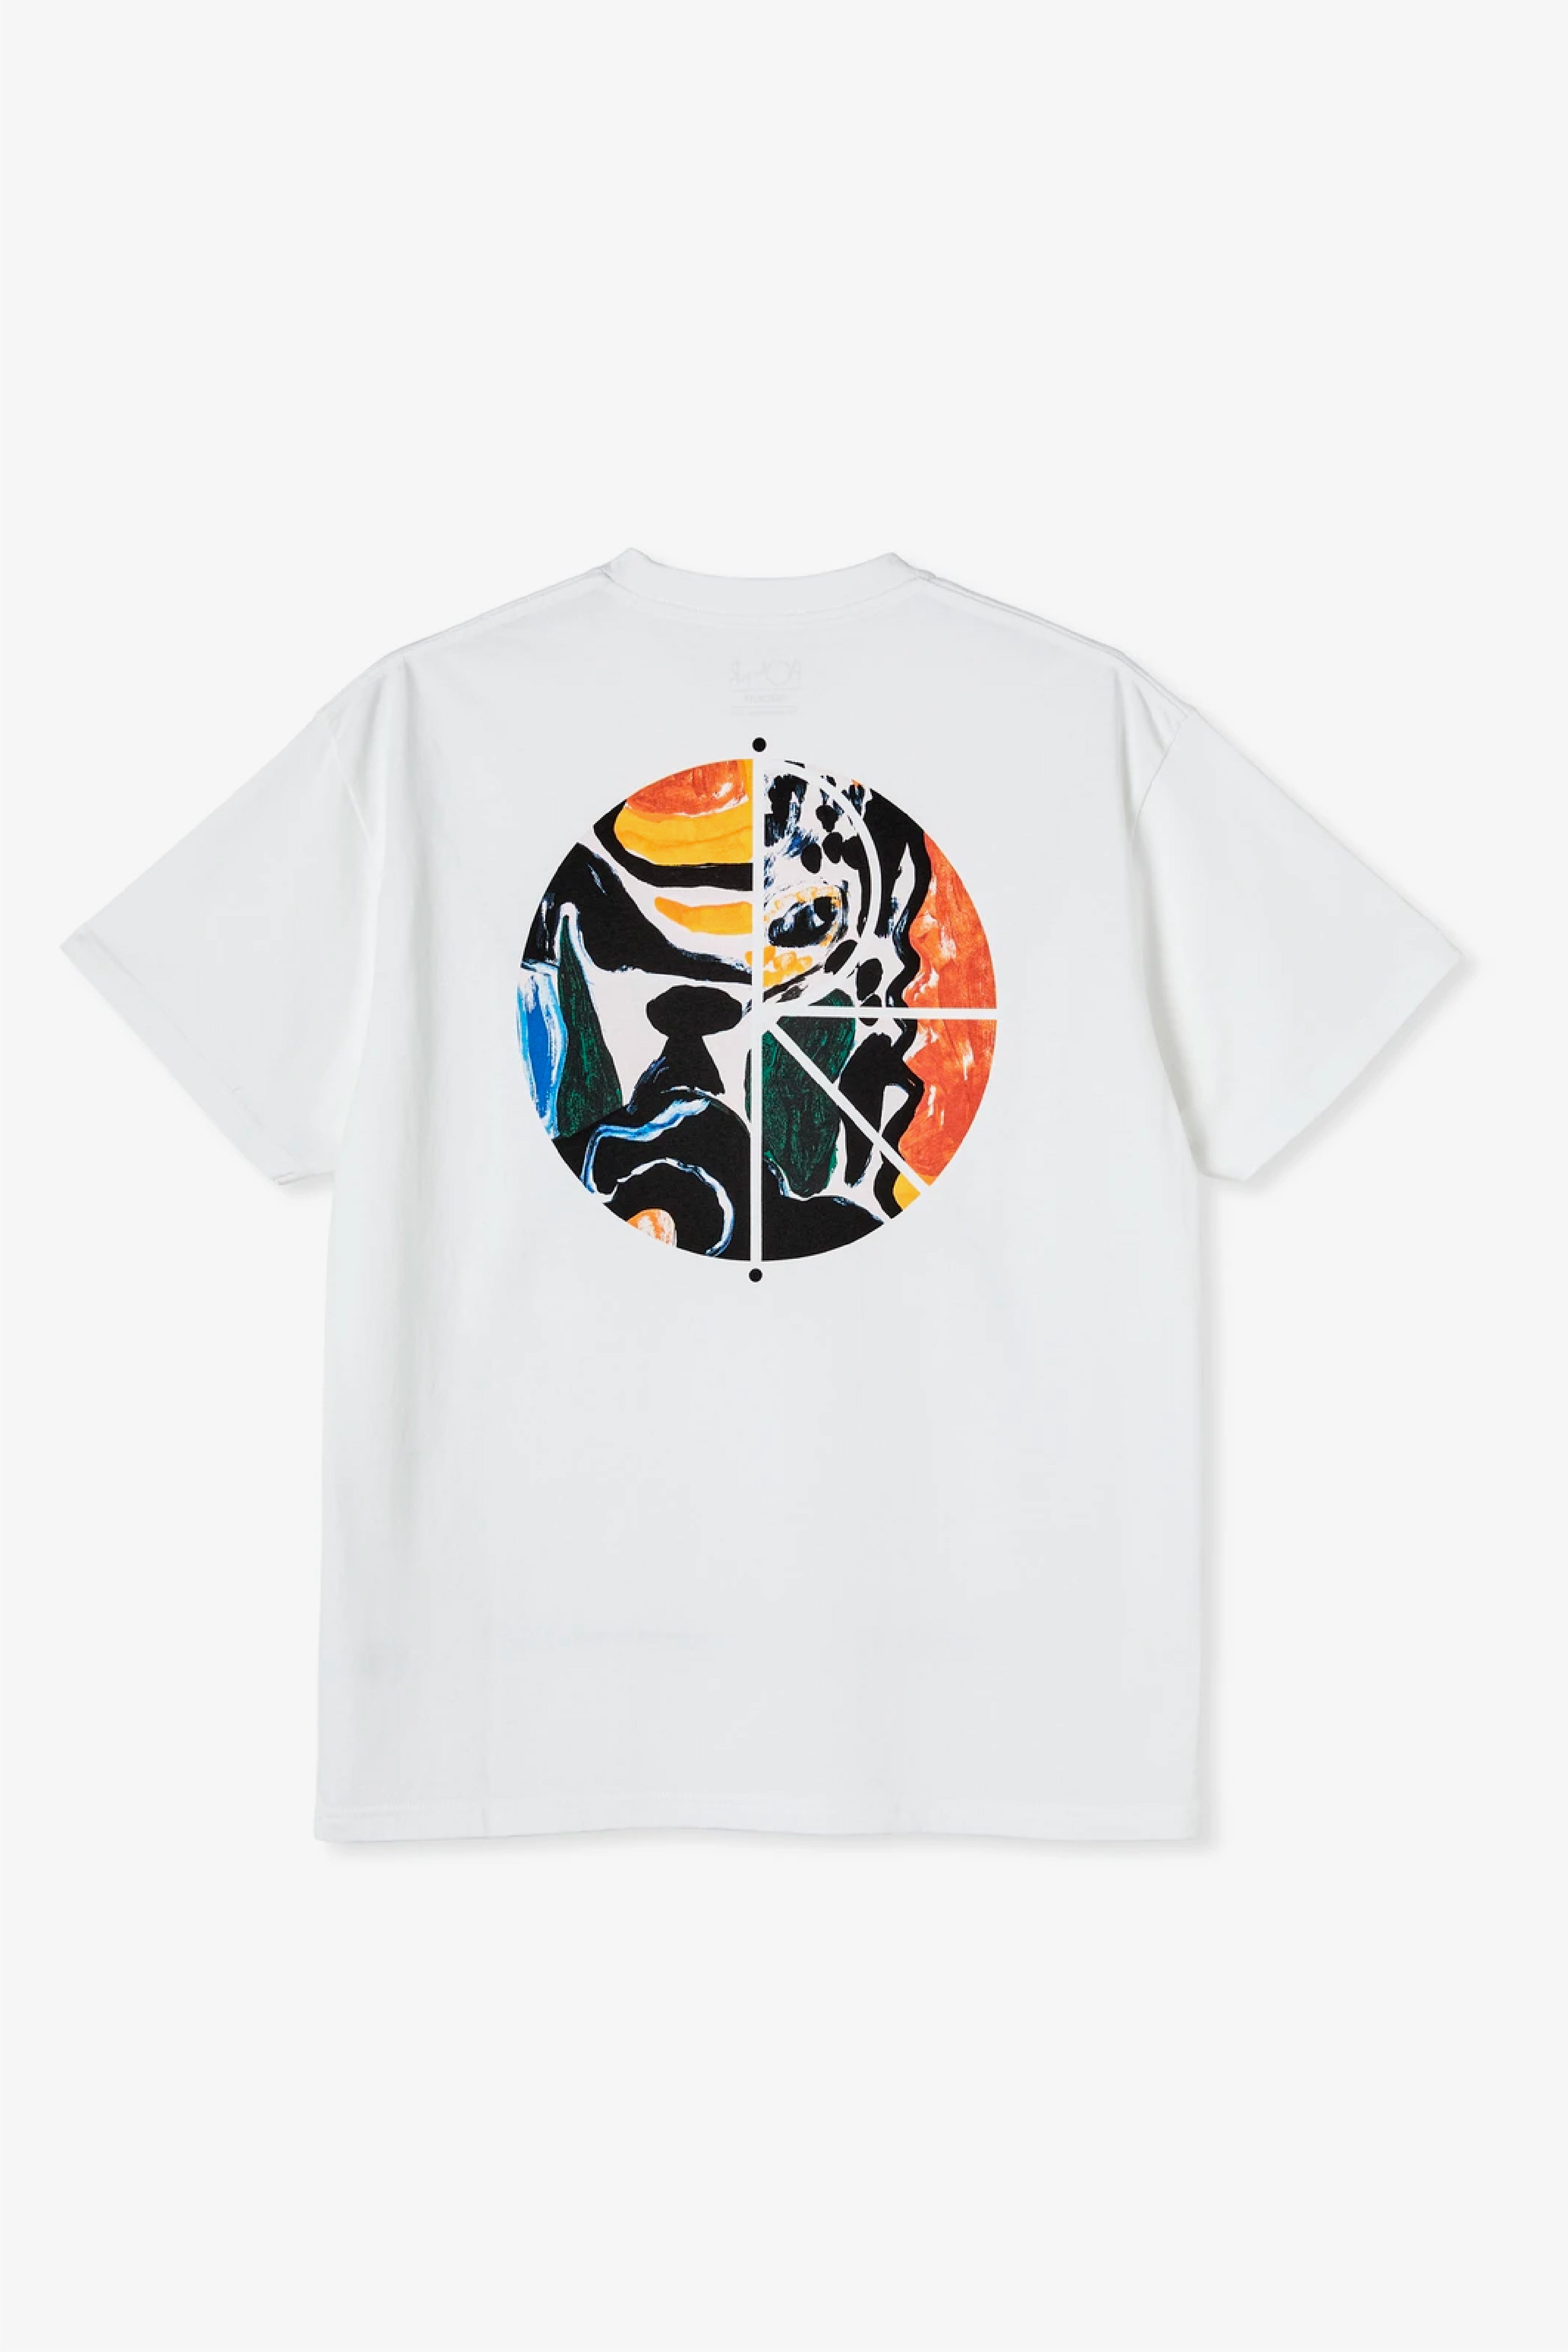 Selectshop FRAME - POLAR SKATE CO. Facescape Fill Logo Tee T-Shirts Dubai